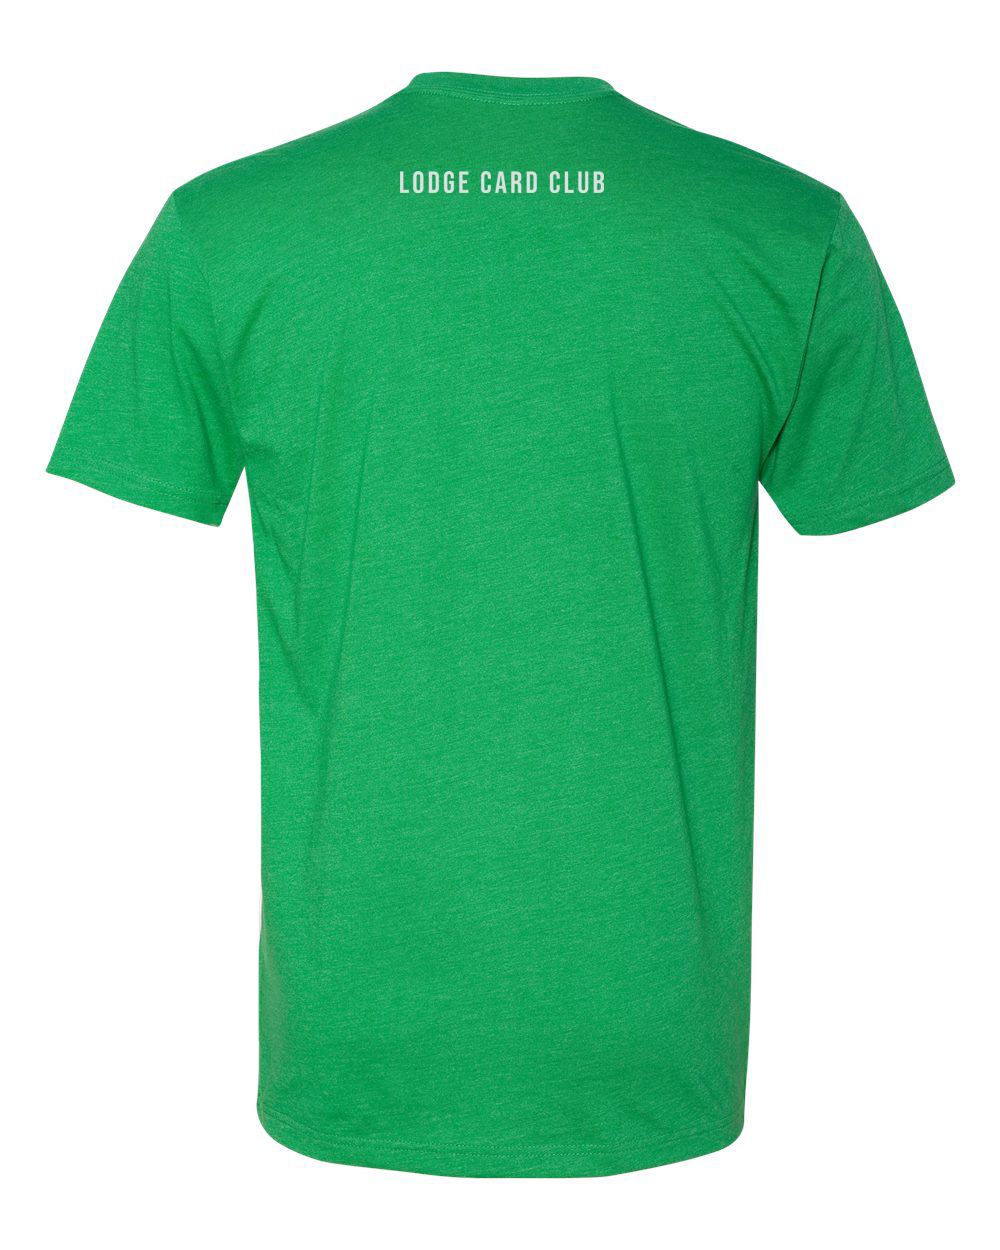 LCC Spade Shirt - Kelly Green